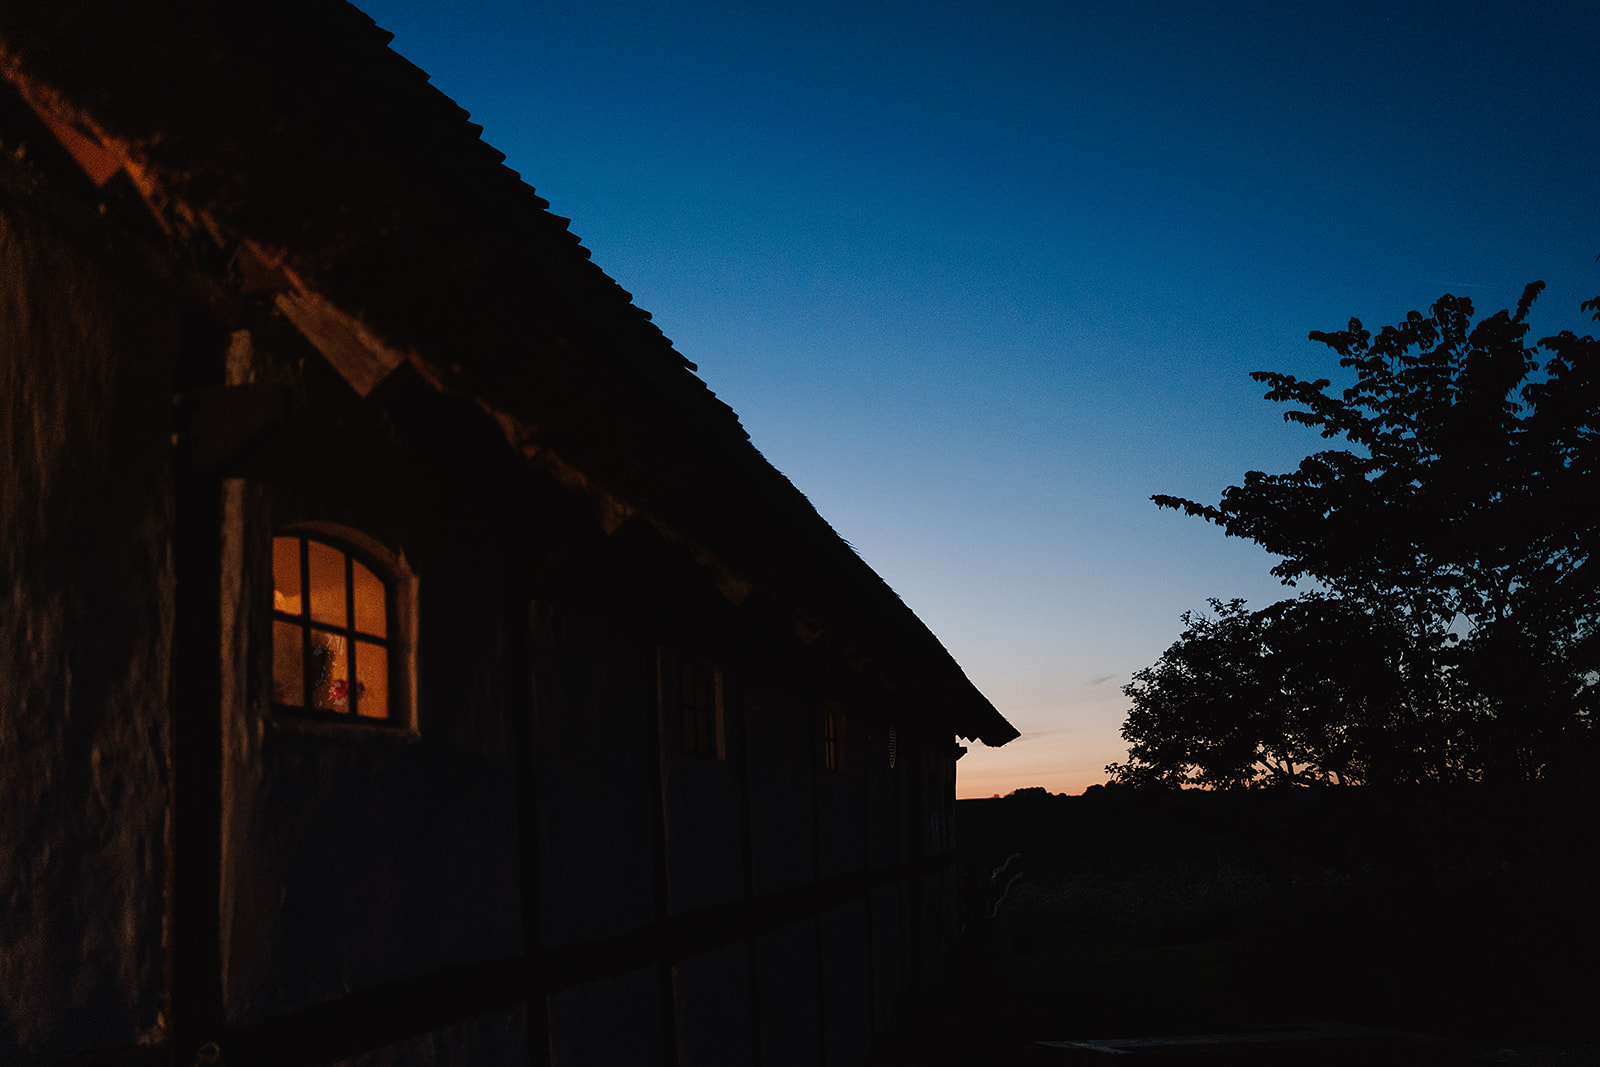 Axatorpsgården farmhouse at sunset